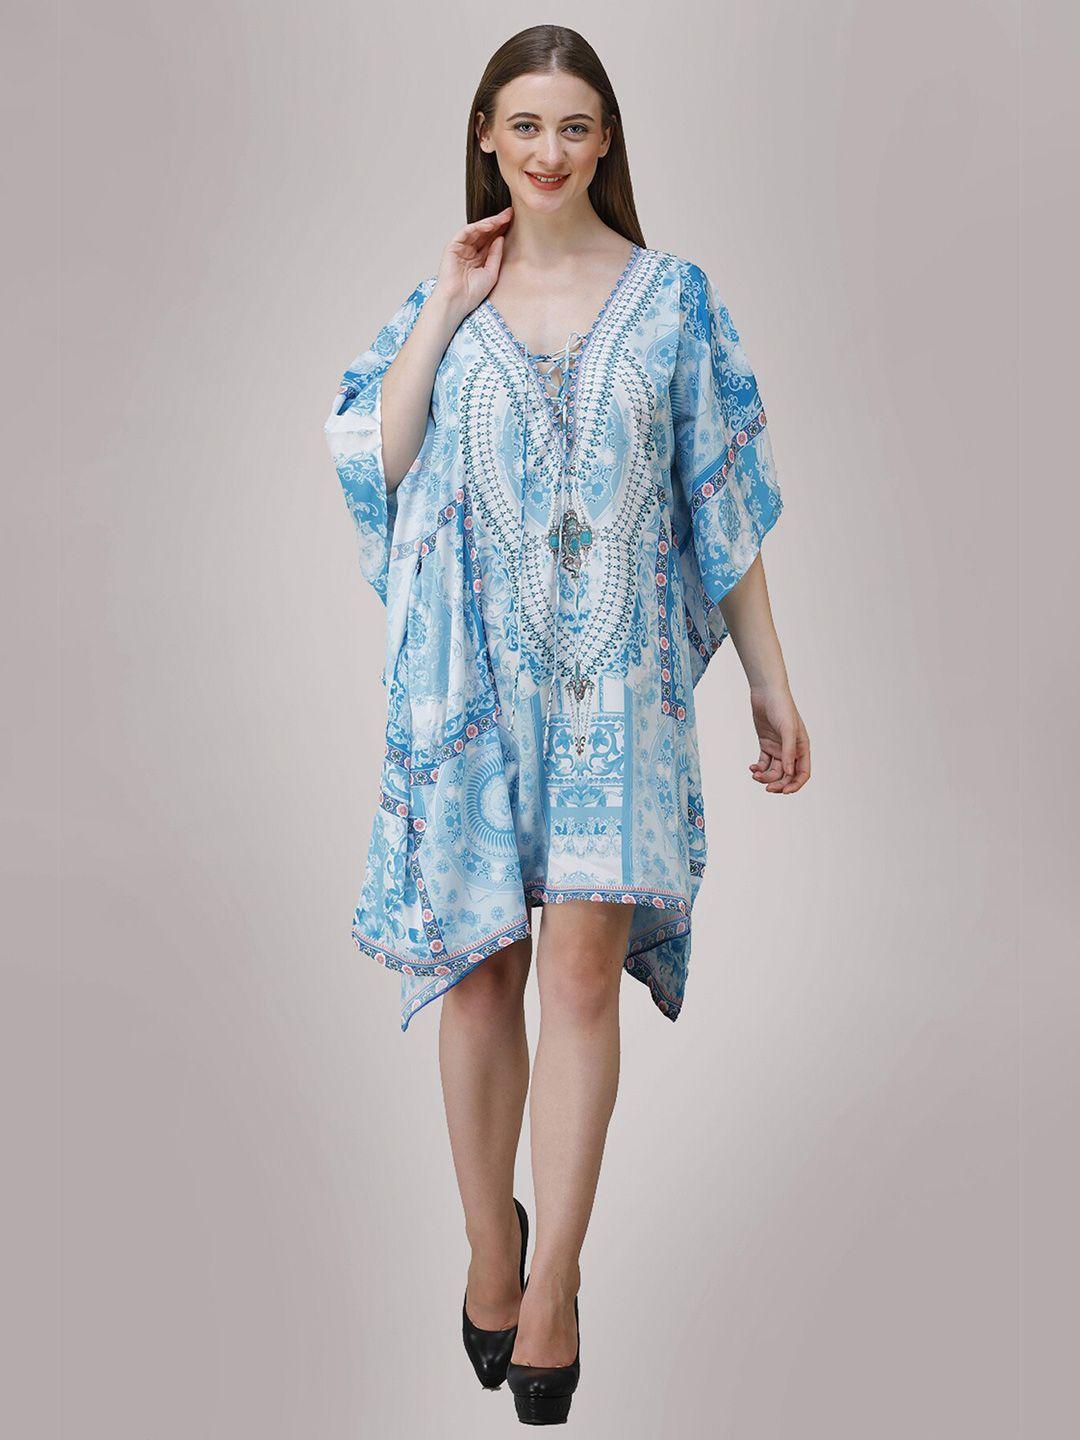 rajoria instyle blue & white floral georgette ethnic kaftan dress